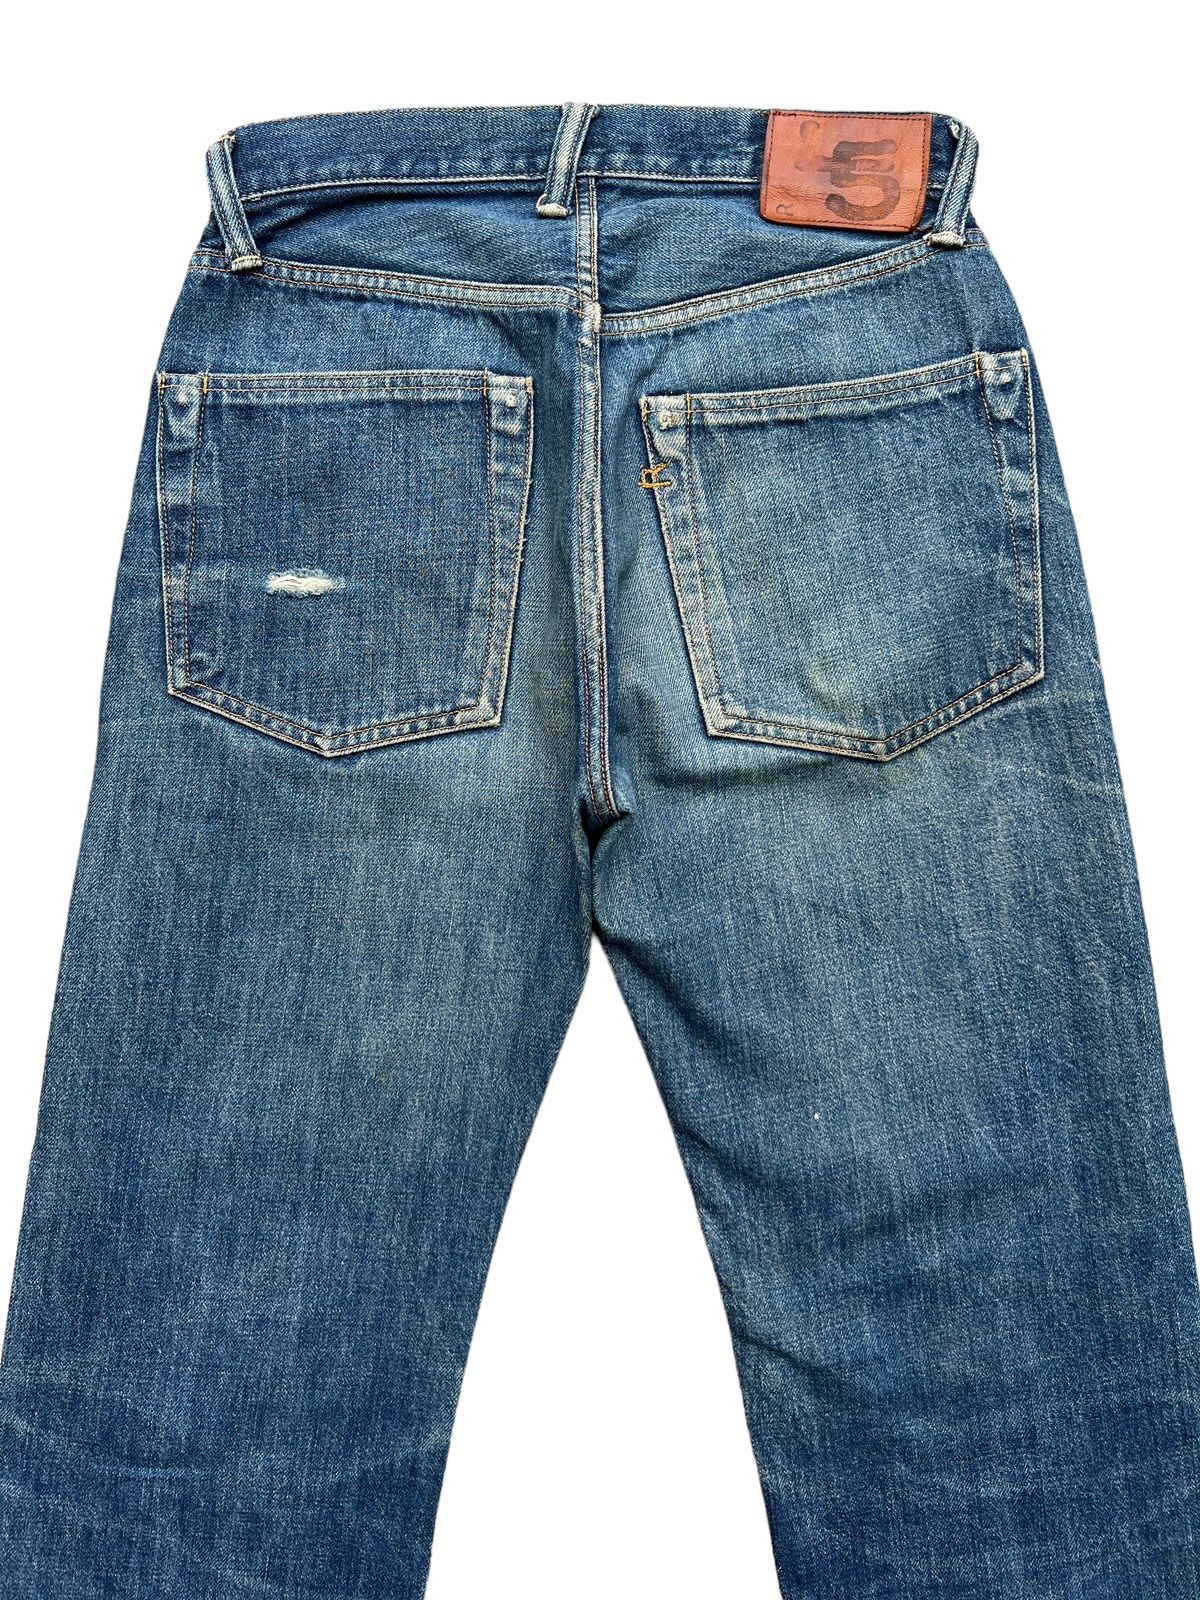 Vintage 45Rpm Selvedge Faded Distressed Denim Jeans 29x29 - 5